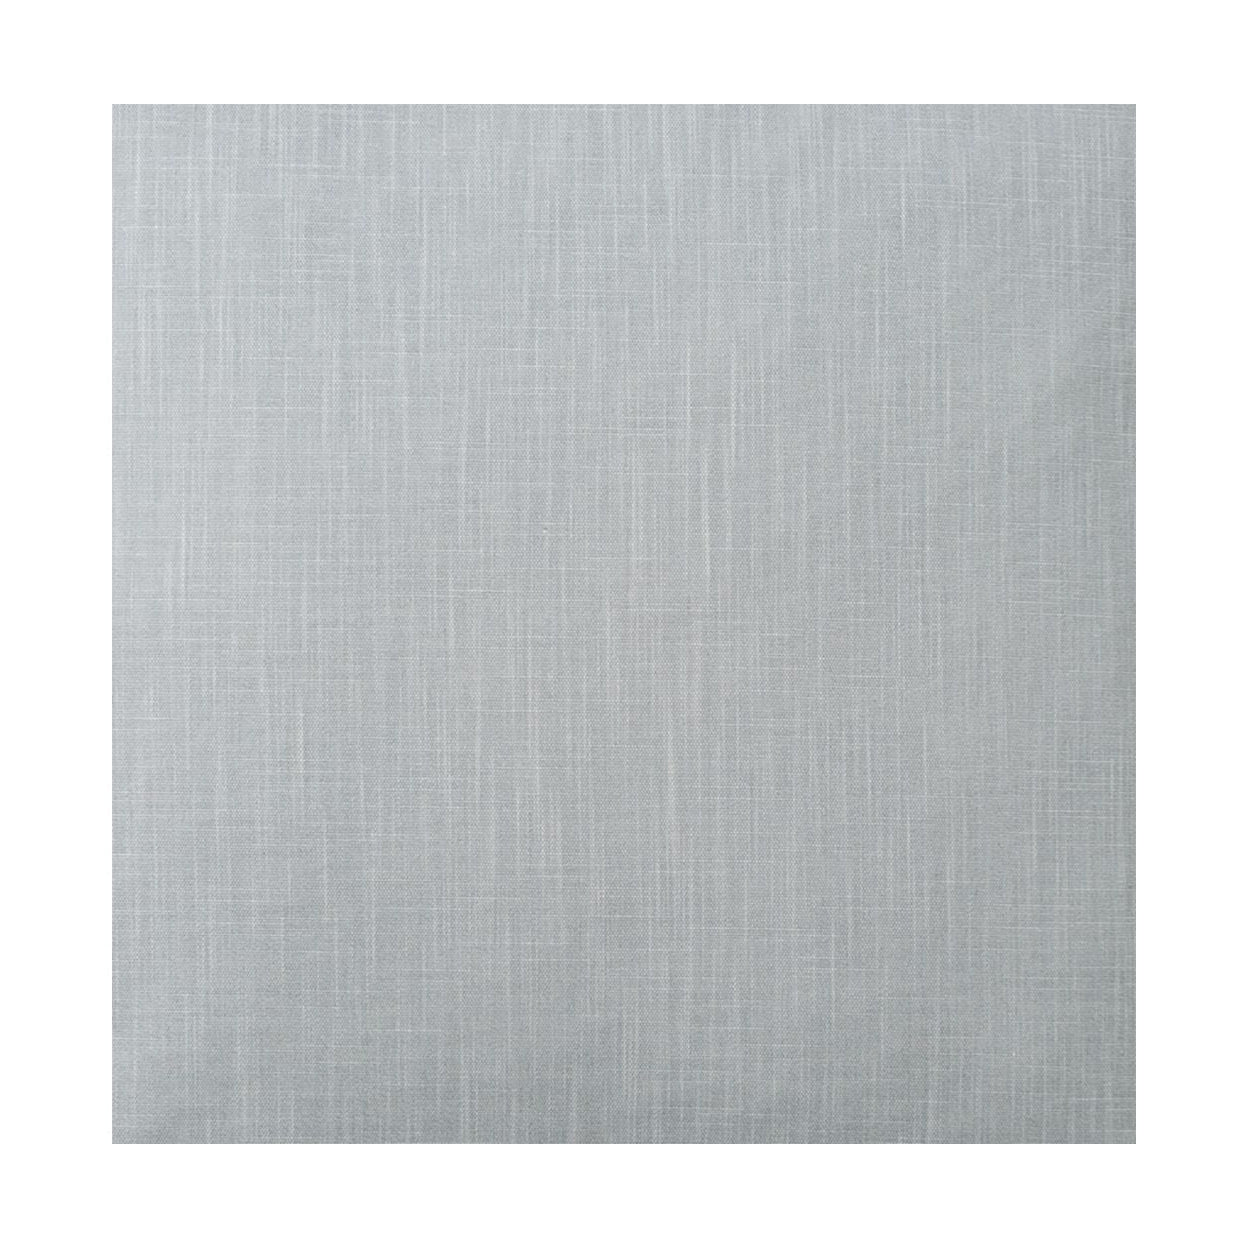 Spira Klotz Fabric Width 150 Cm (Price Per Meter), Light Smoke Blue